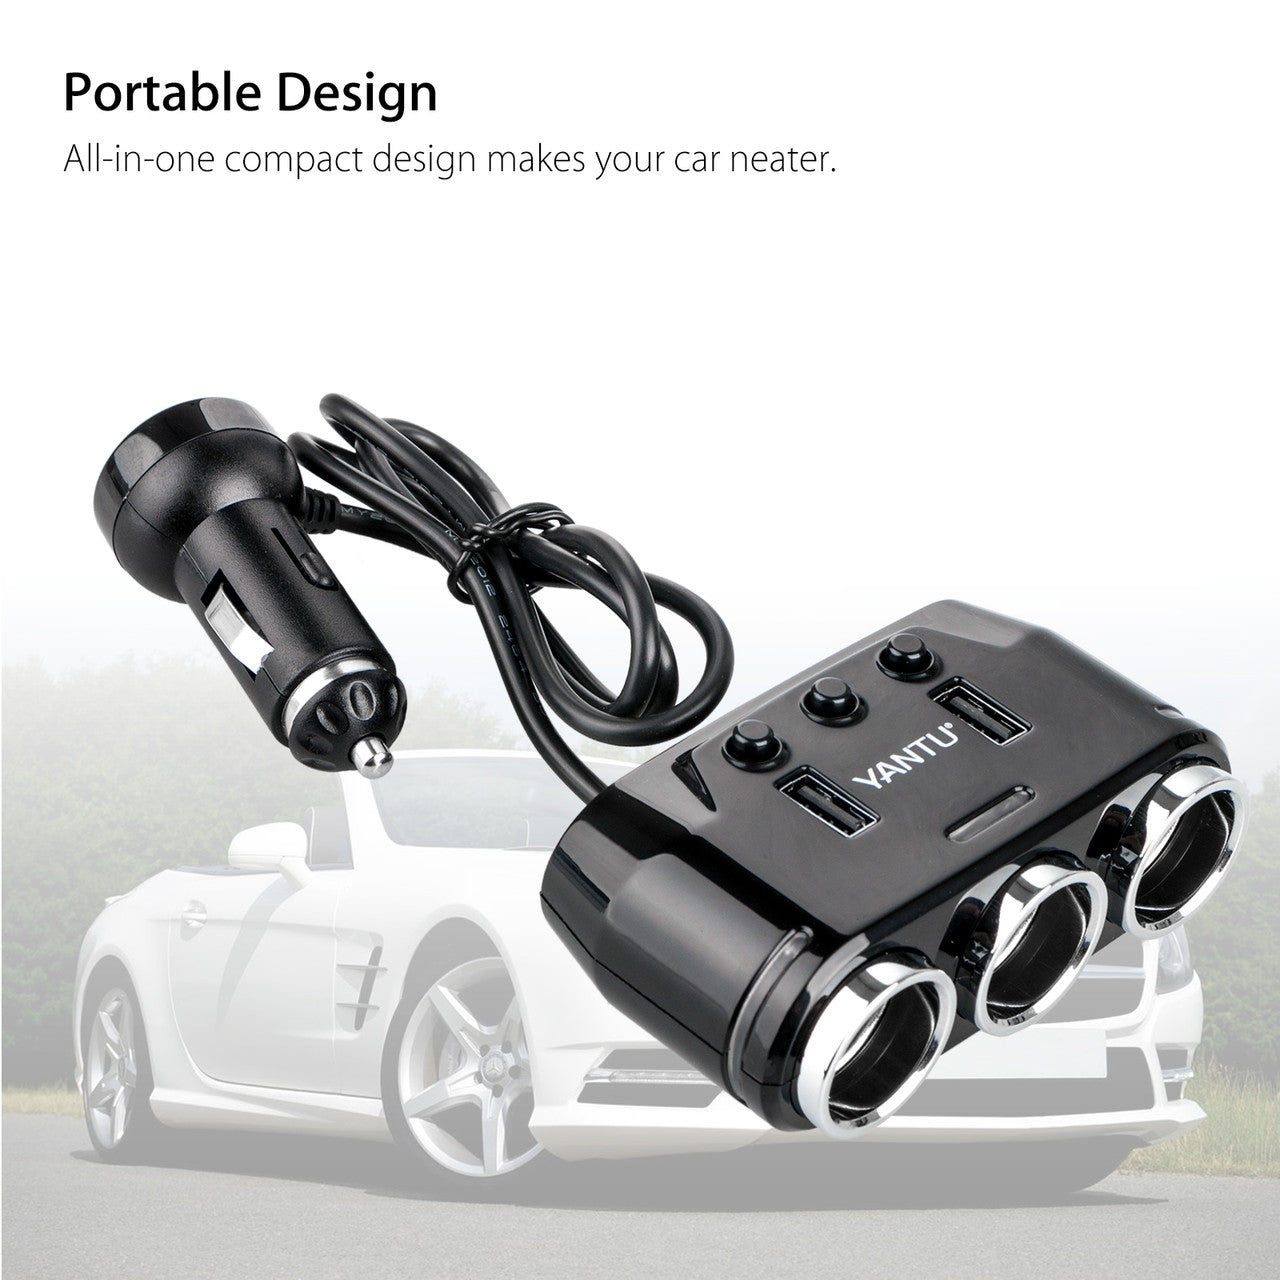 12V 3 Way Car Cigarette Lighter Socket Splitter Dual USB Charger Power Adapter